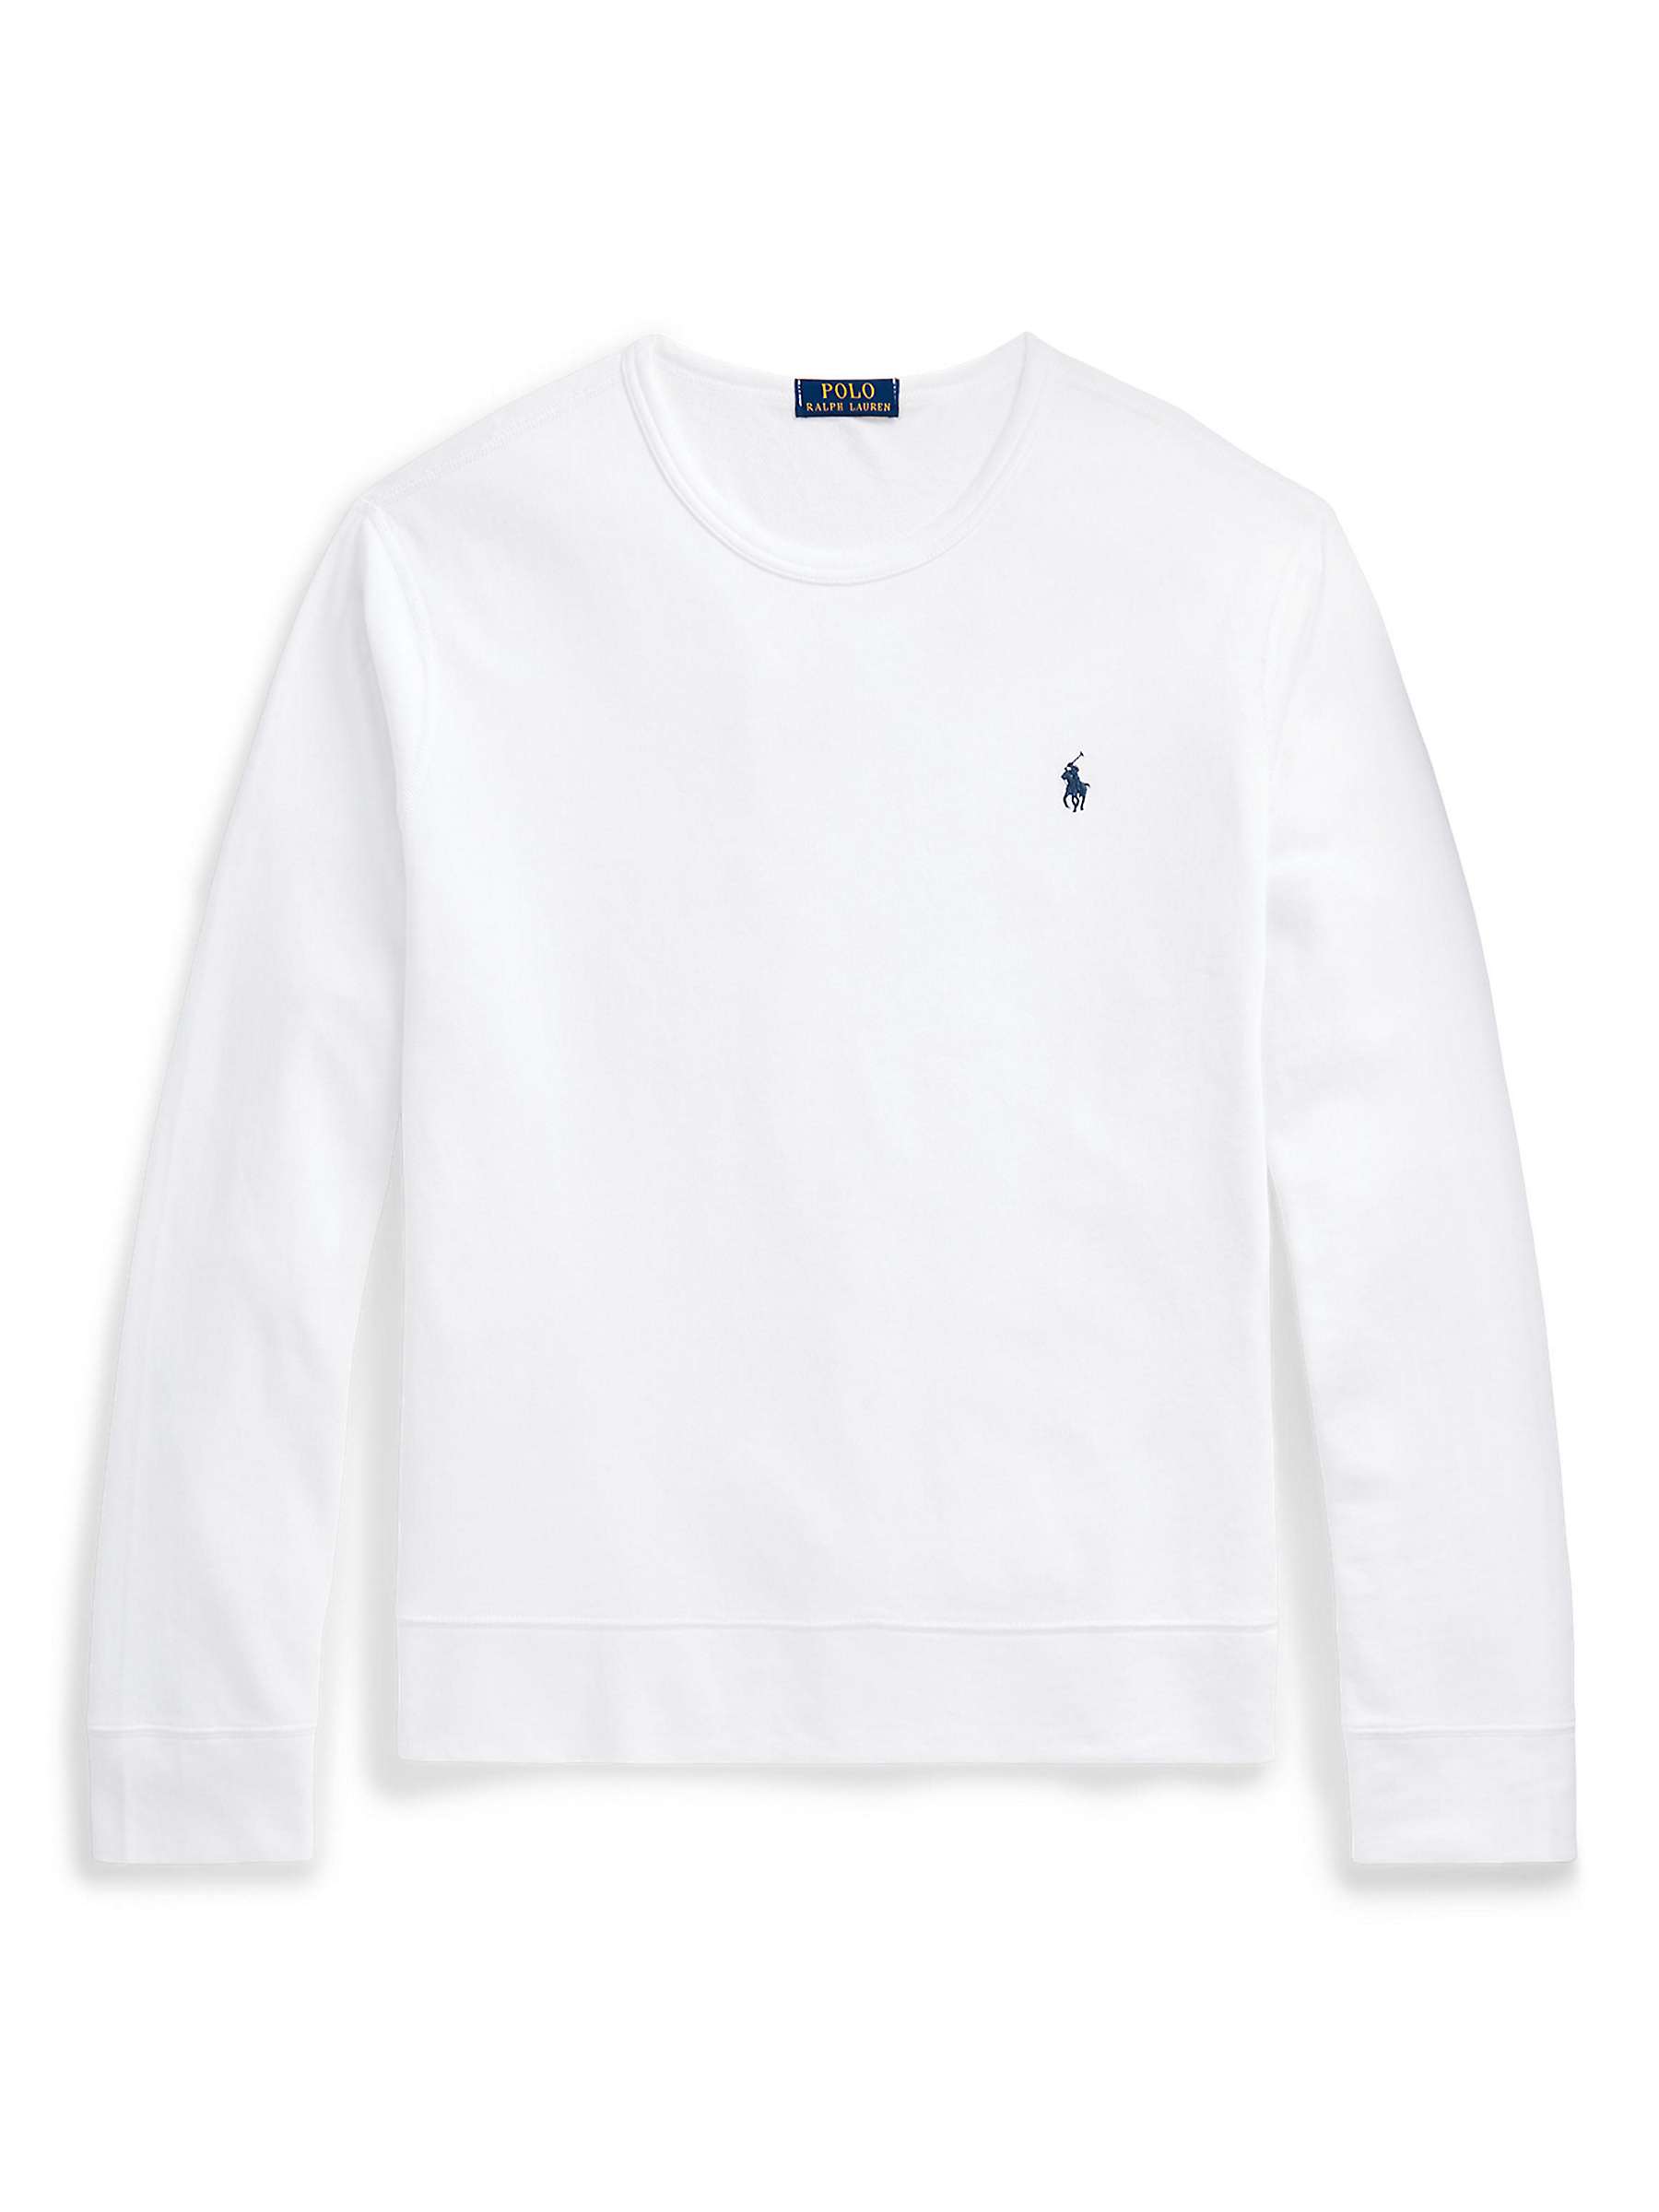 Buy Ralph Lauren Cotton Terry Long Sleeve Top, White Online at johnlewis.com